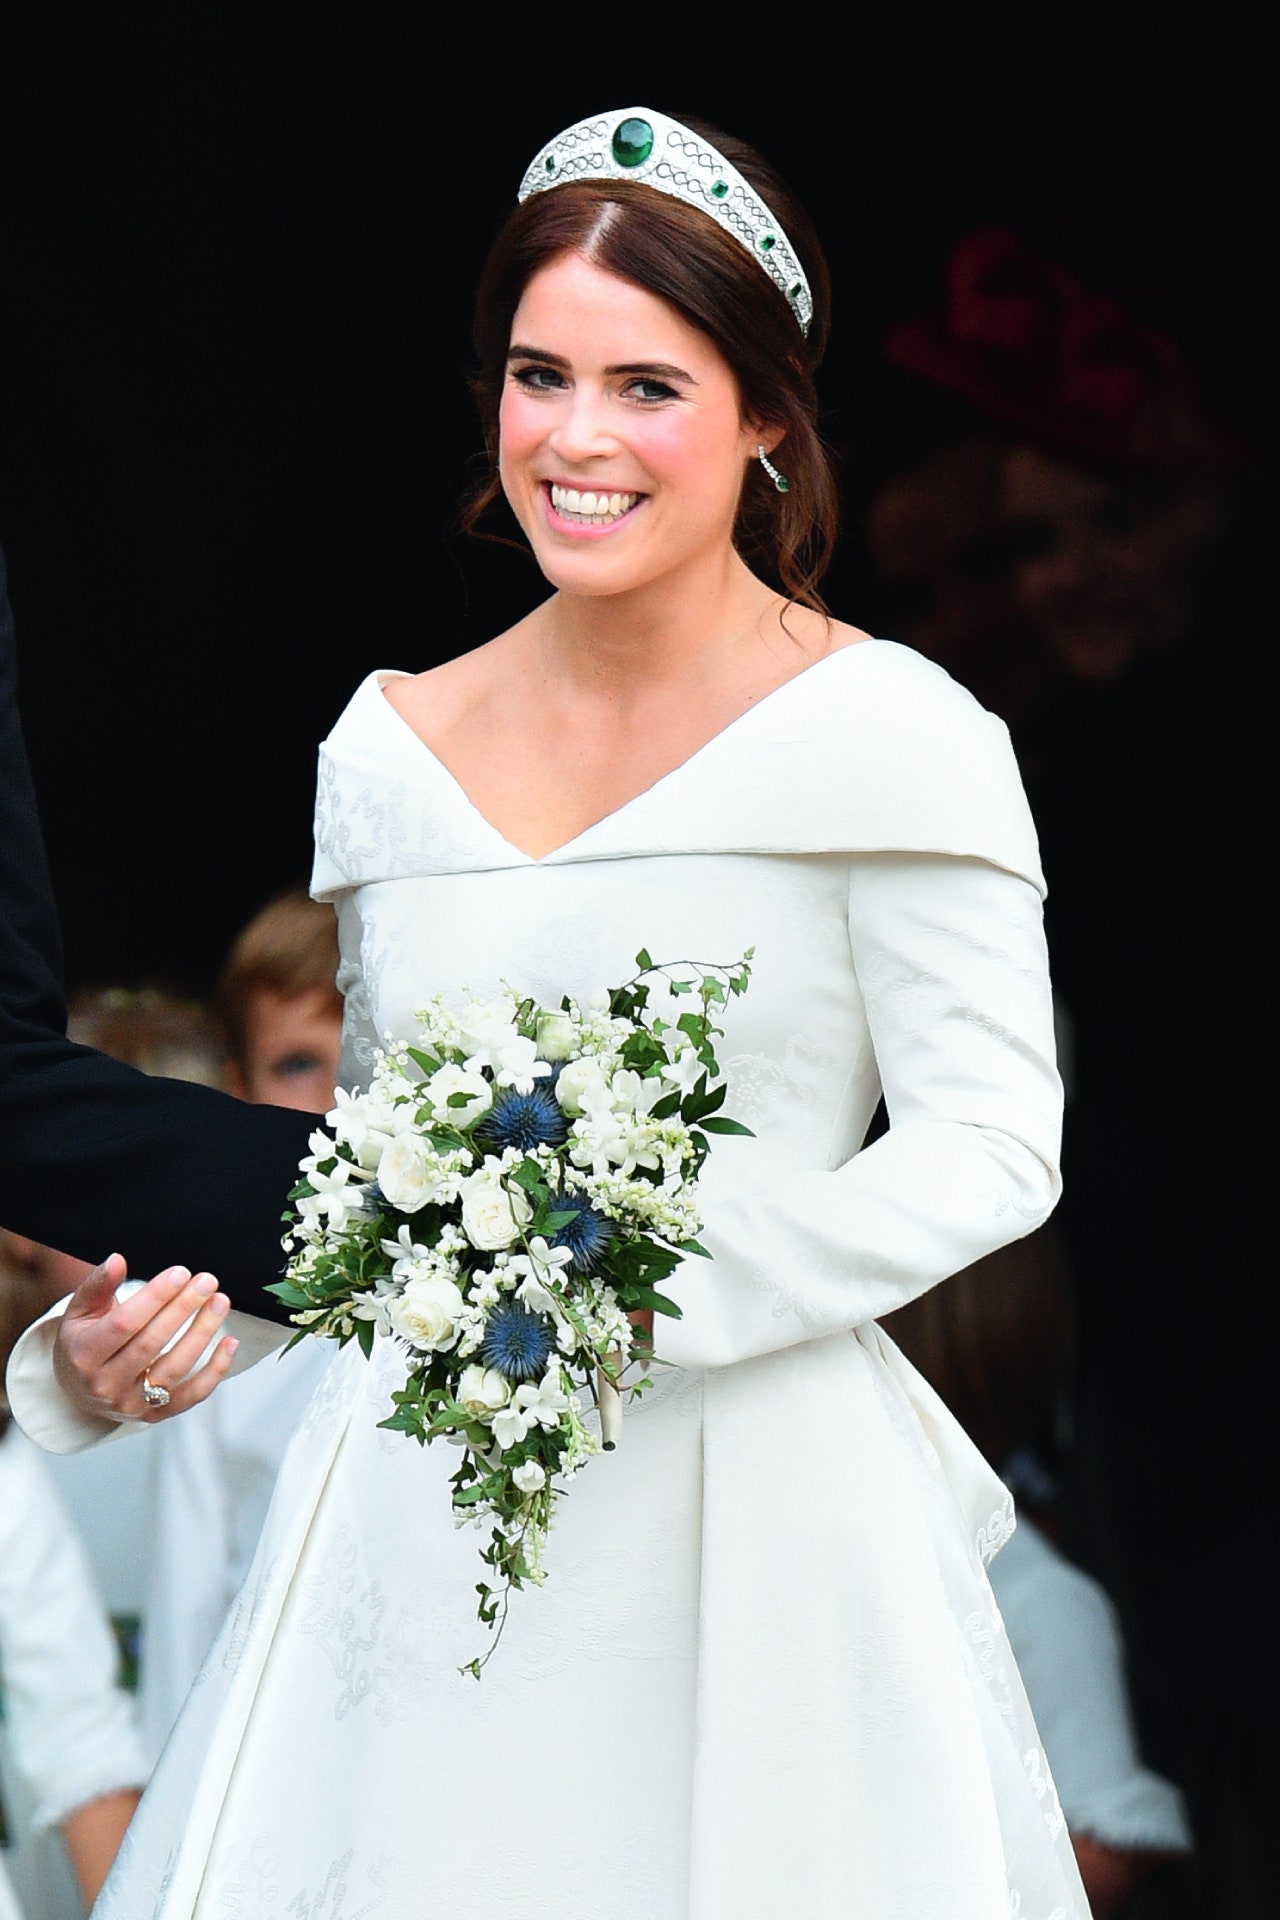 The Greville Emerald Kokoshnik Tiara Worn by Princess Eugenie at her wedding to Jack Brooksbank 2018